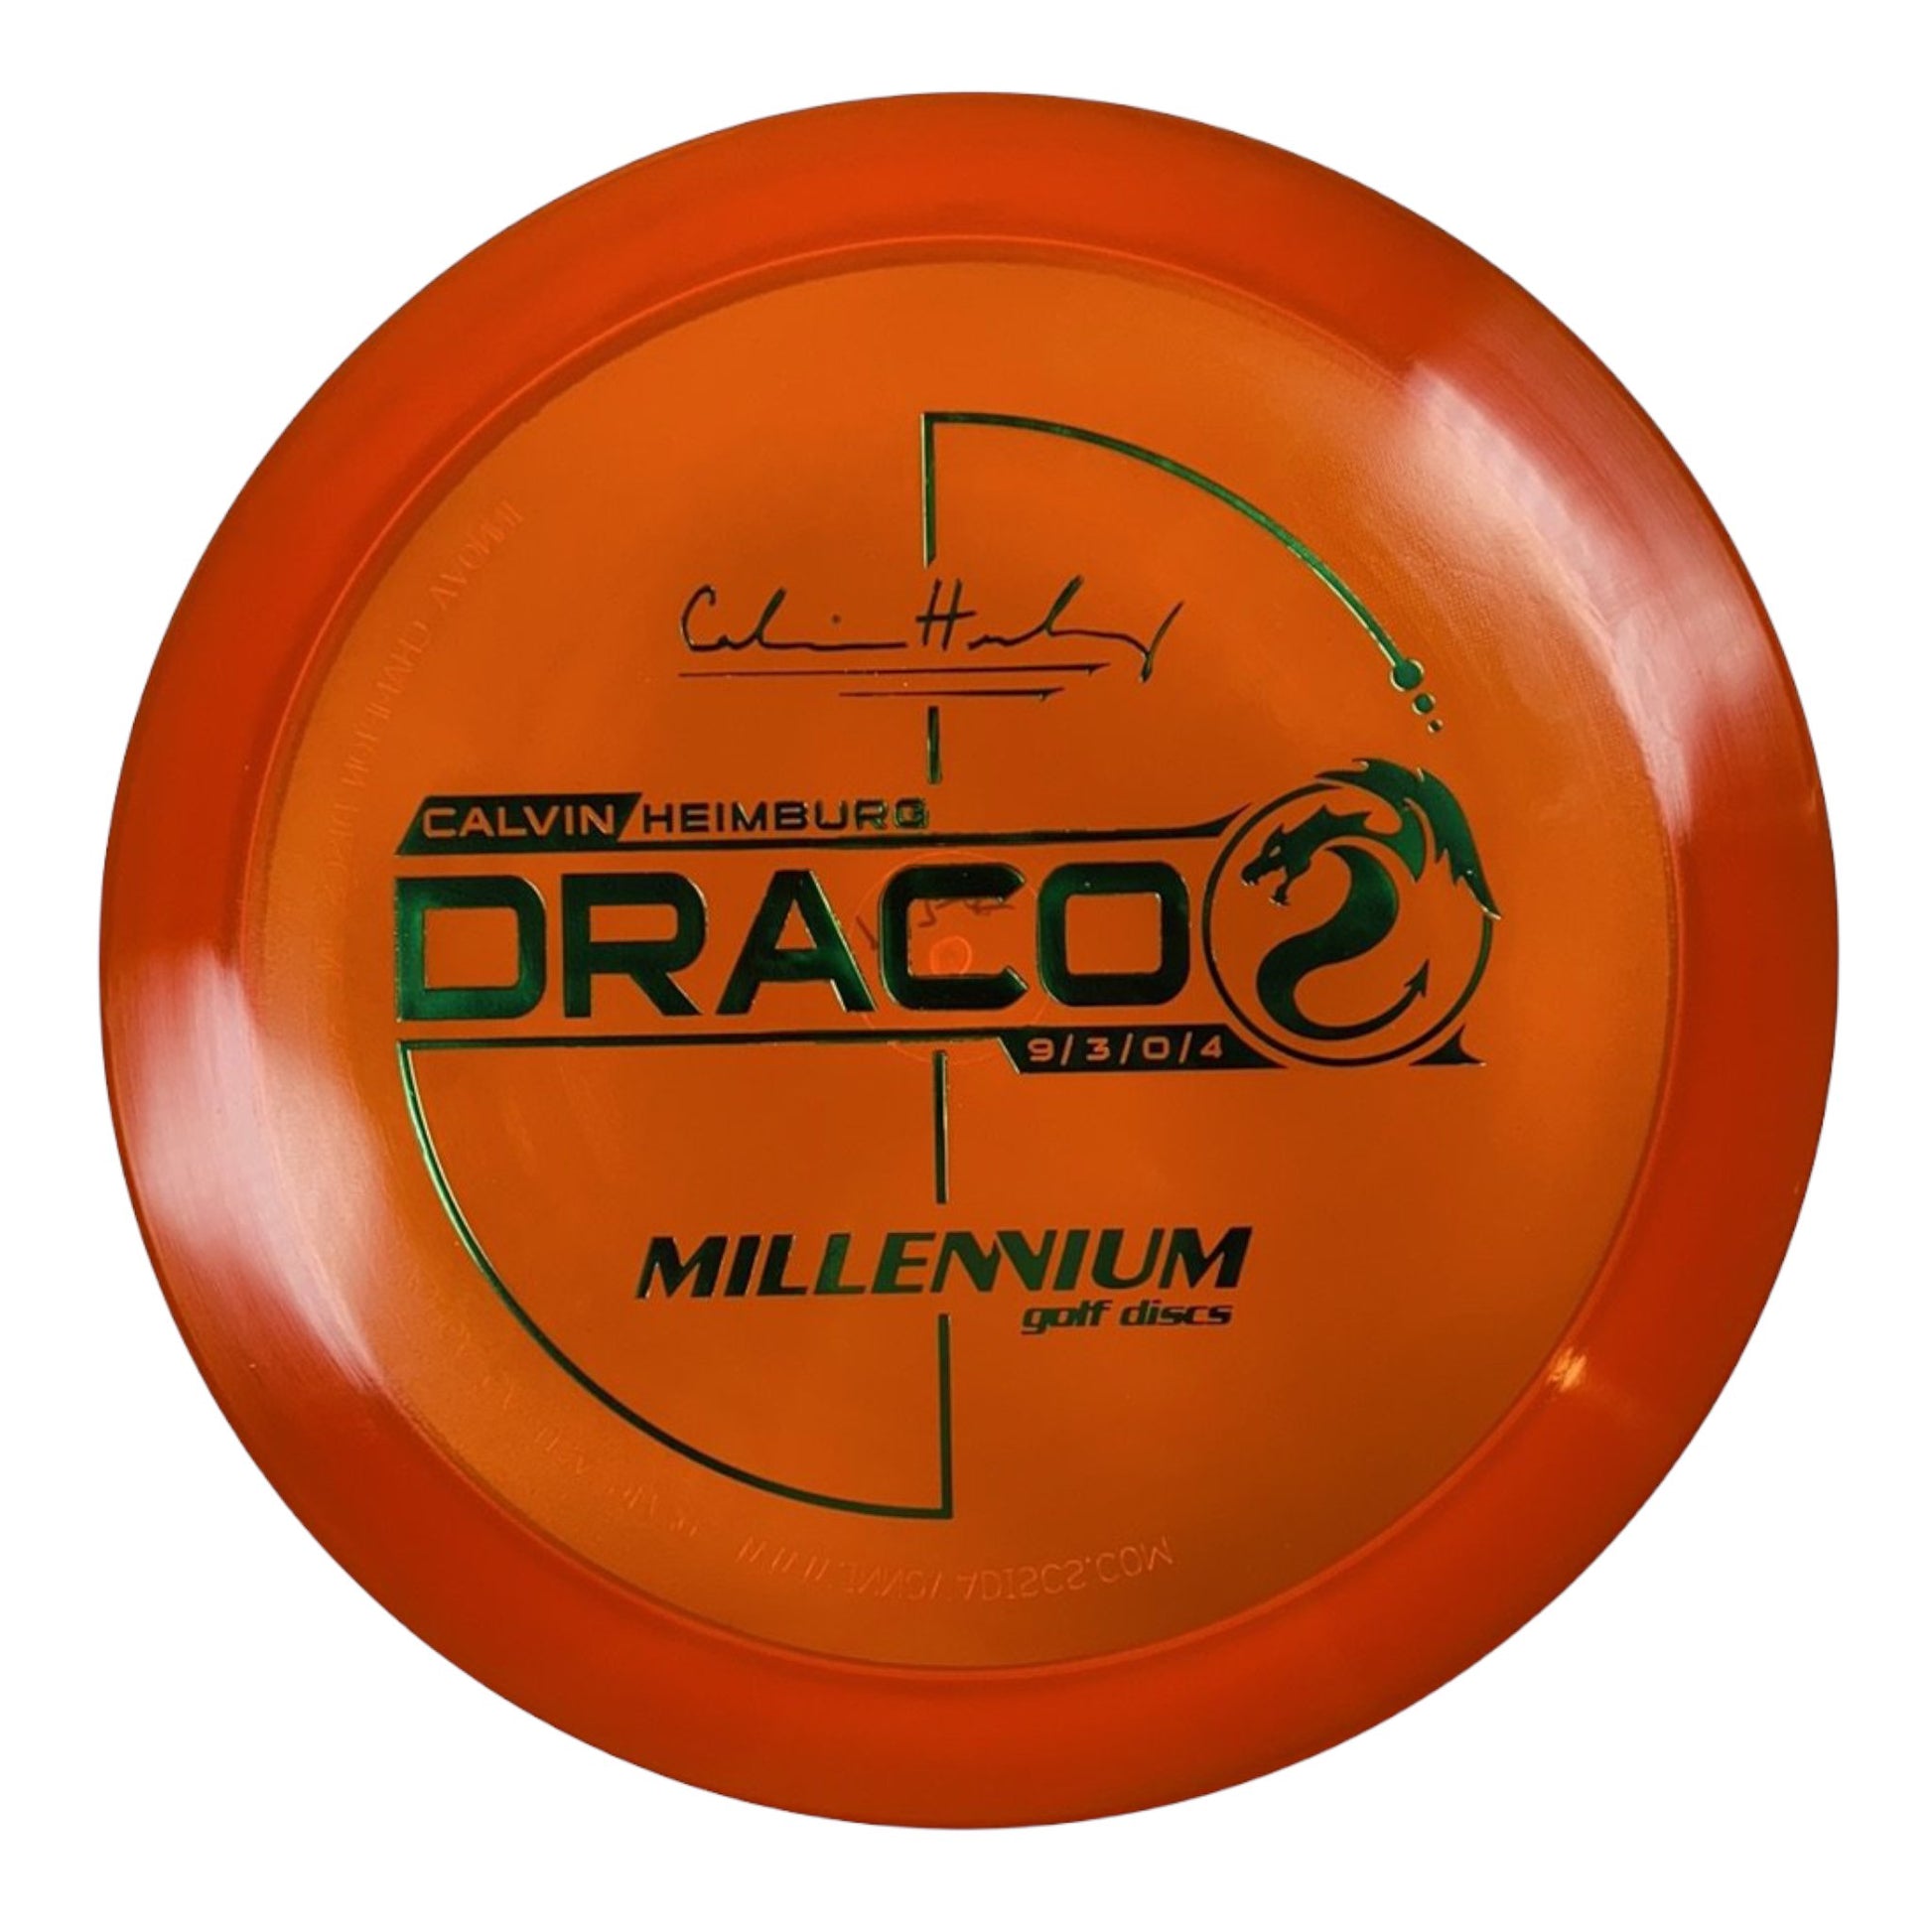 Millennium Golf Discs Draco | Quantum | Orange/Green 175g (Calvin Heimburg) Disc Golf